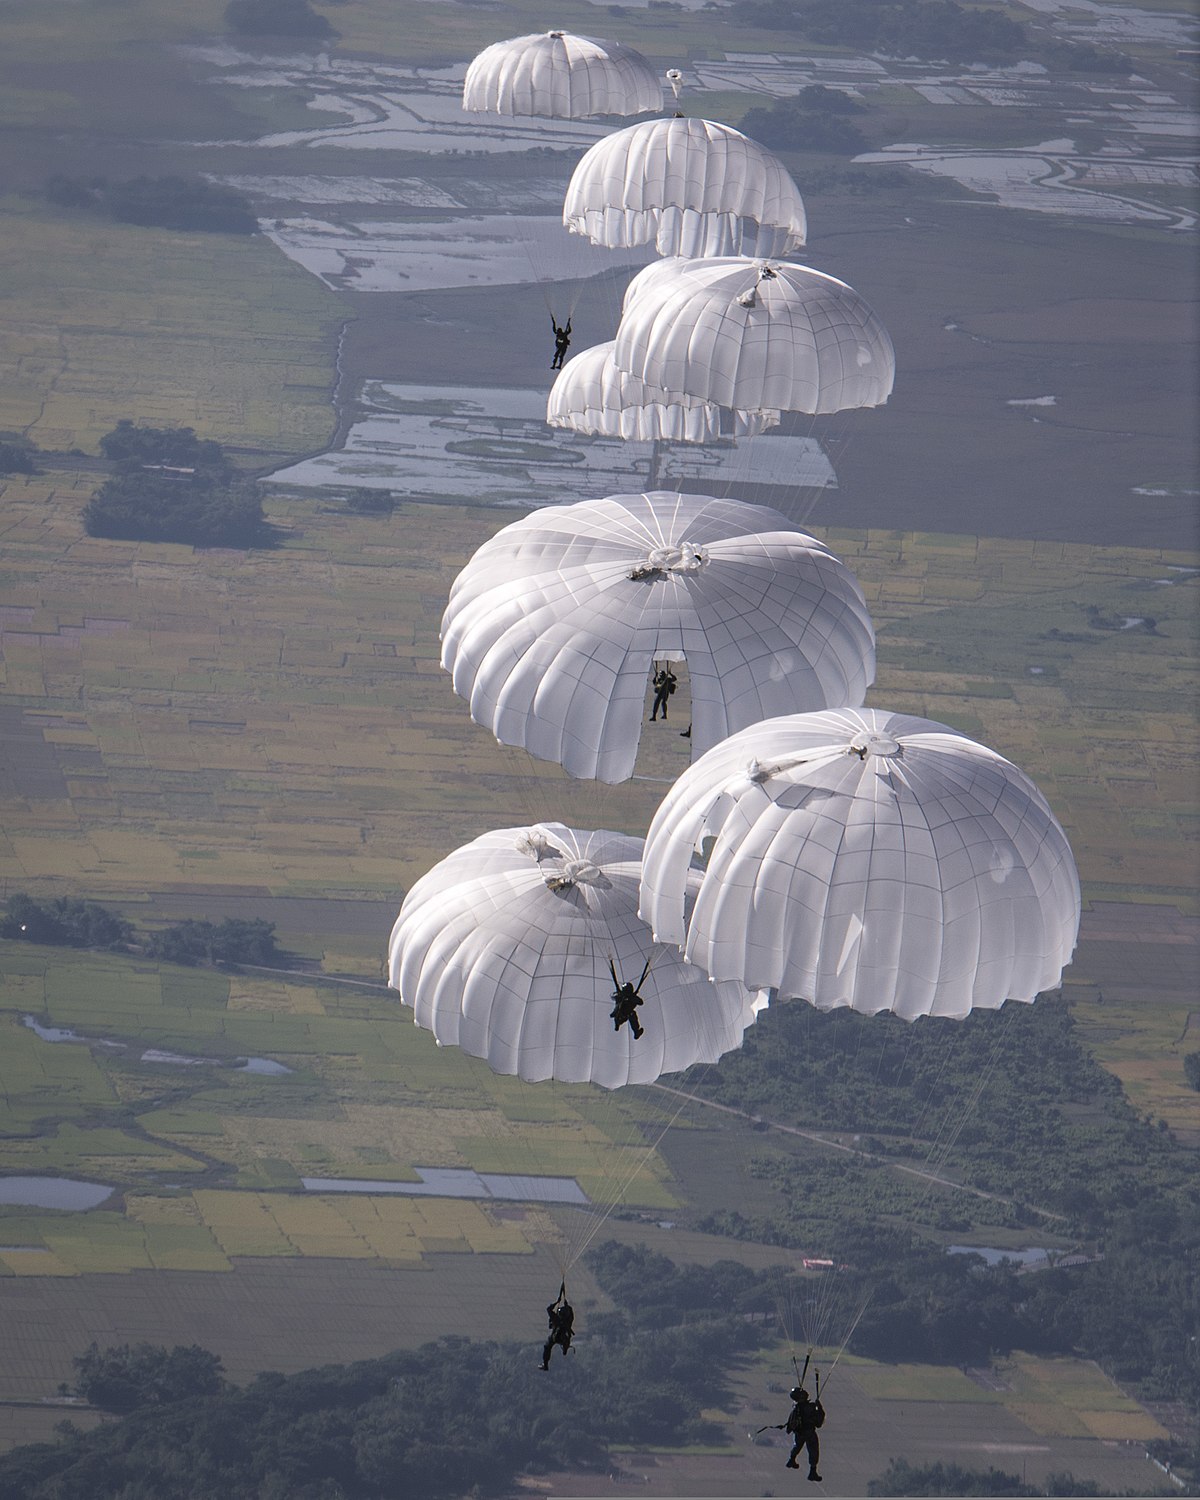 Parachute image